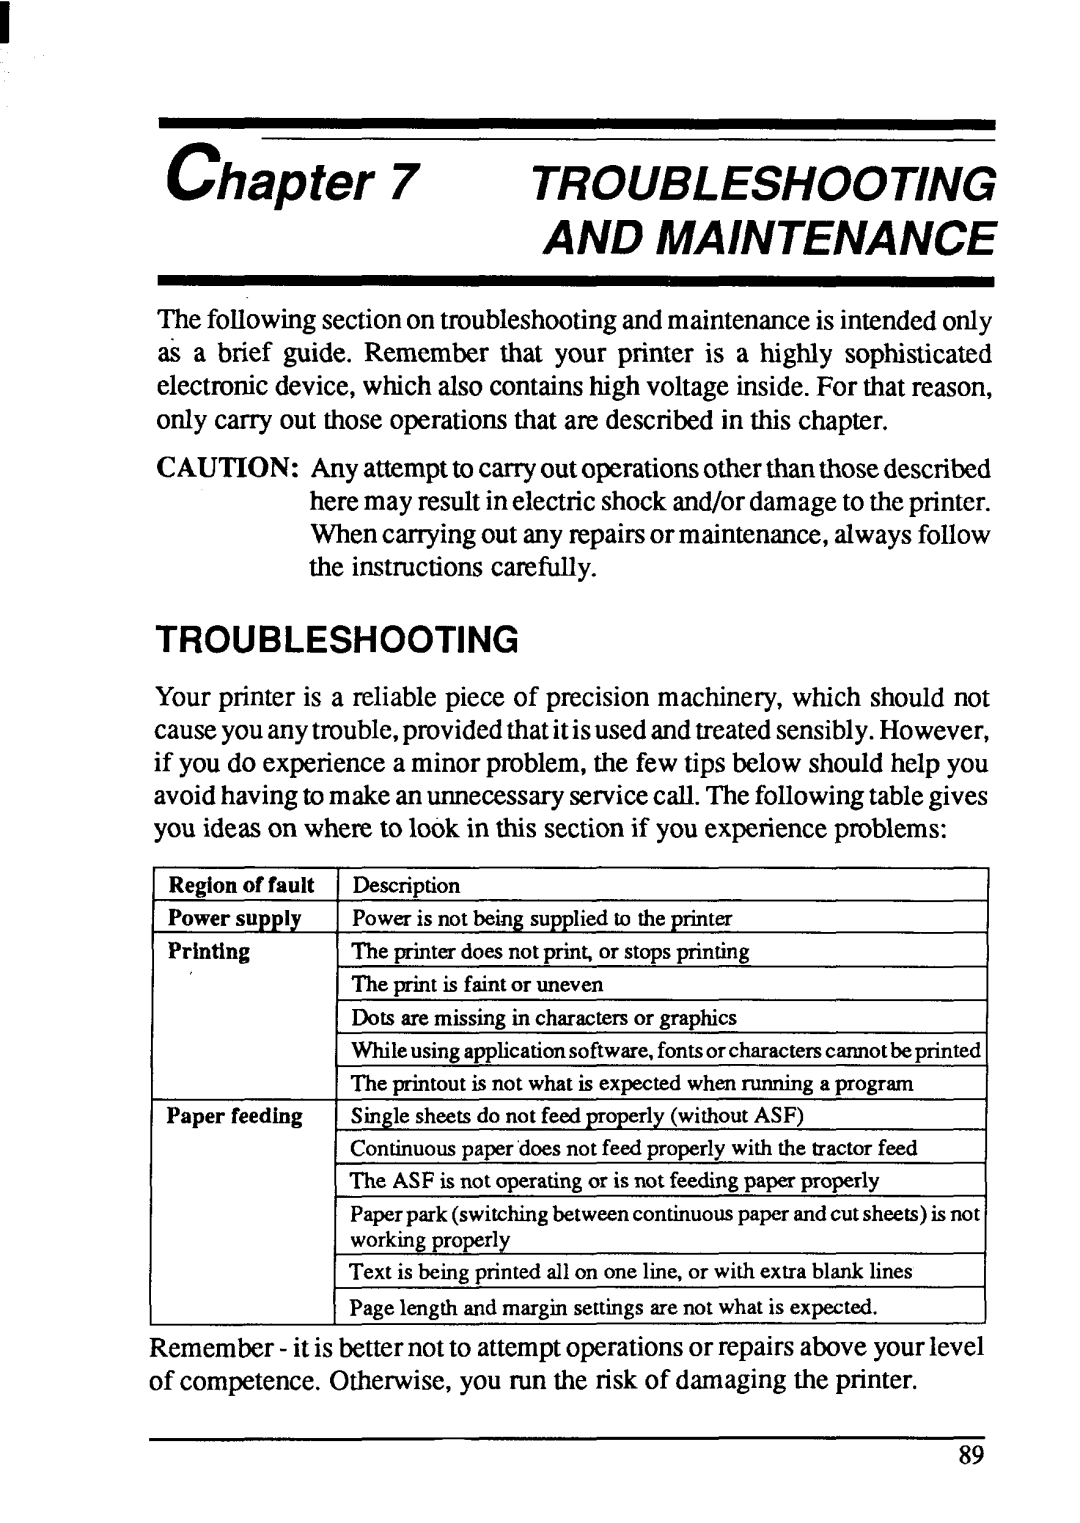 Star Micronics NX-1001 manual Troubleshooting And Maintenance 